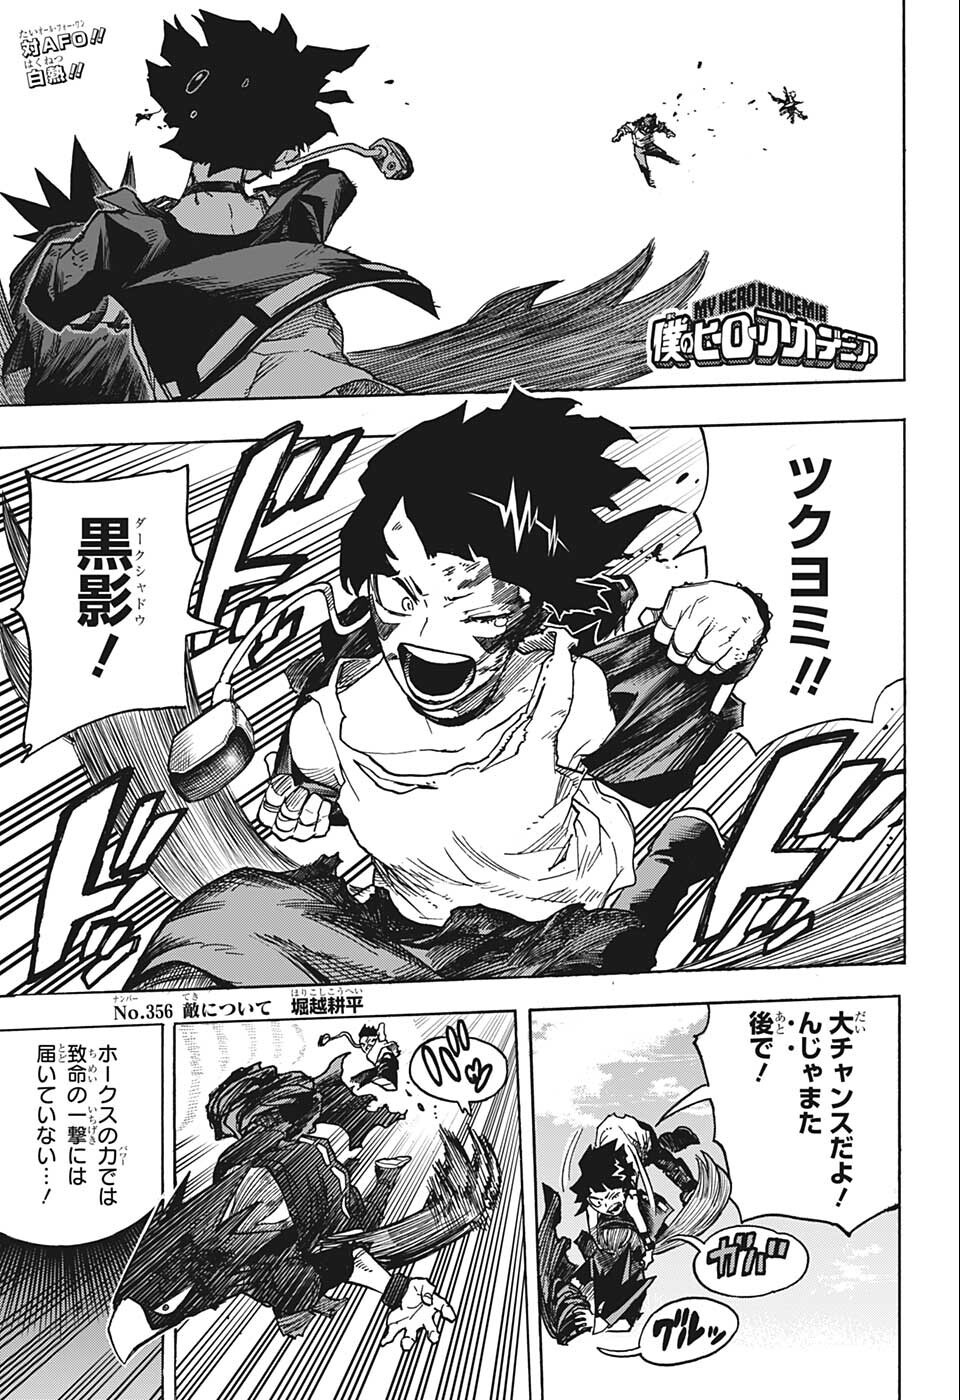 Boku no Hero Academia - Chapter 356 - Page 1